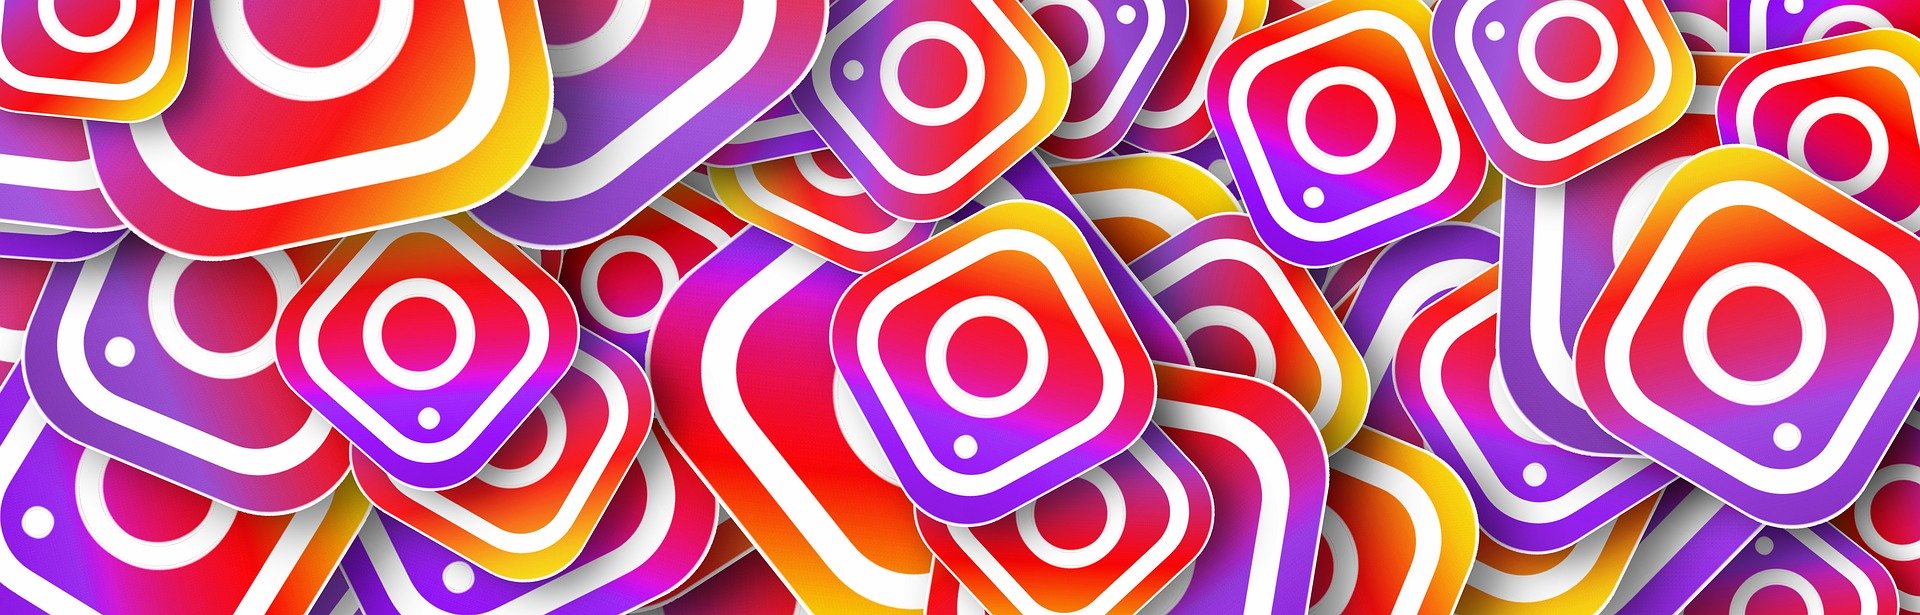 instagram 3319588 1920 - Instagram & Video Marketing for Business